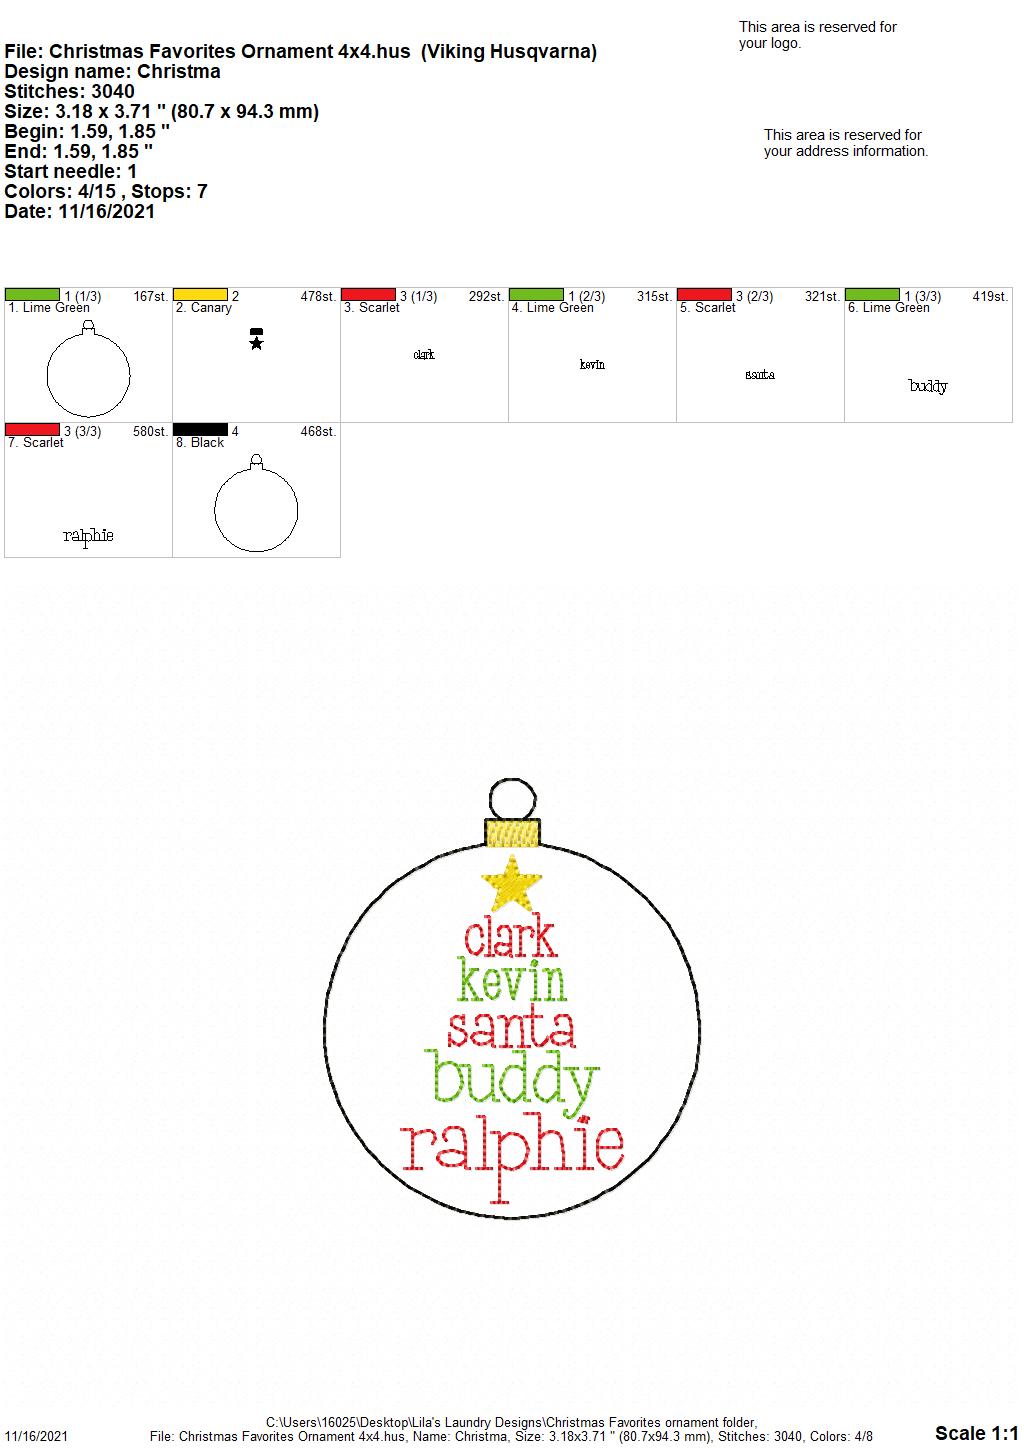 Christmas Favorites Ornament - Digital Embroidery Design